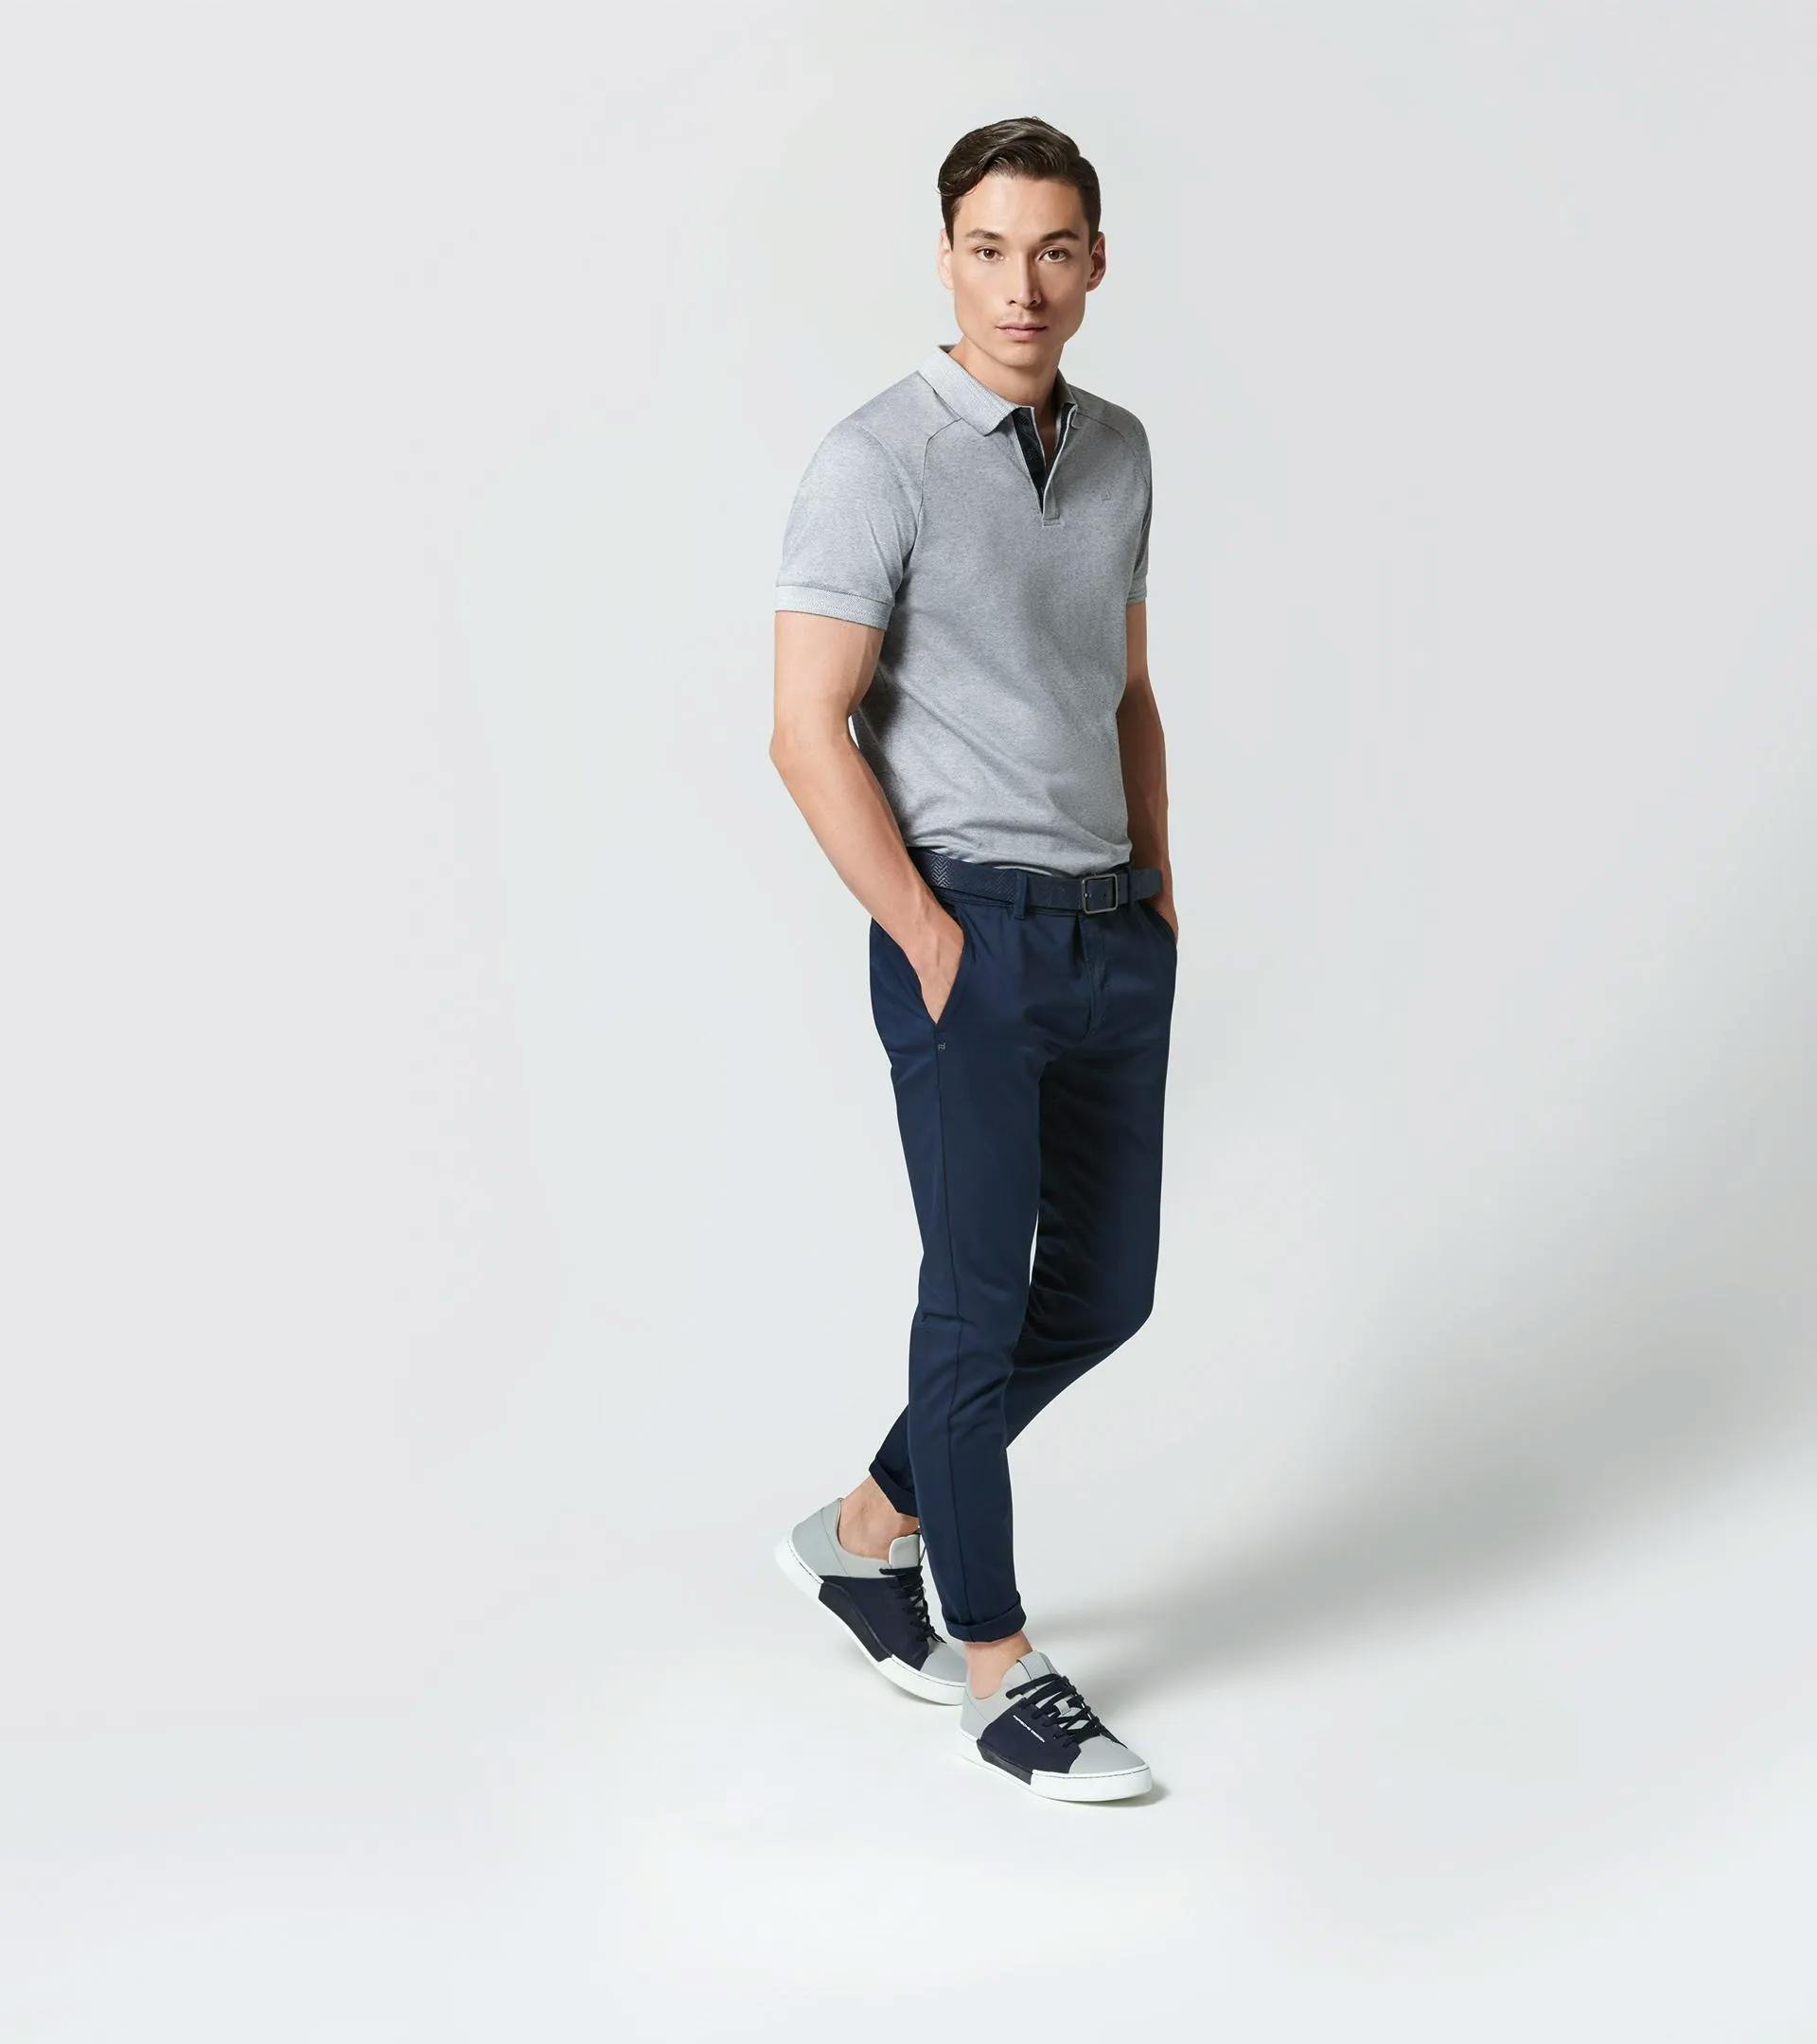 Stand Collar Shirt - Designer Shirts for Men, Porsche Design